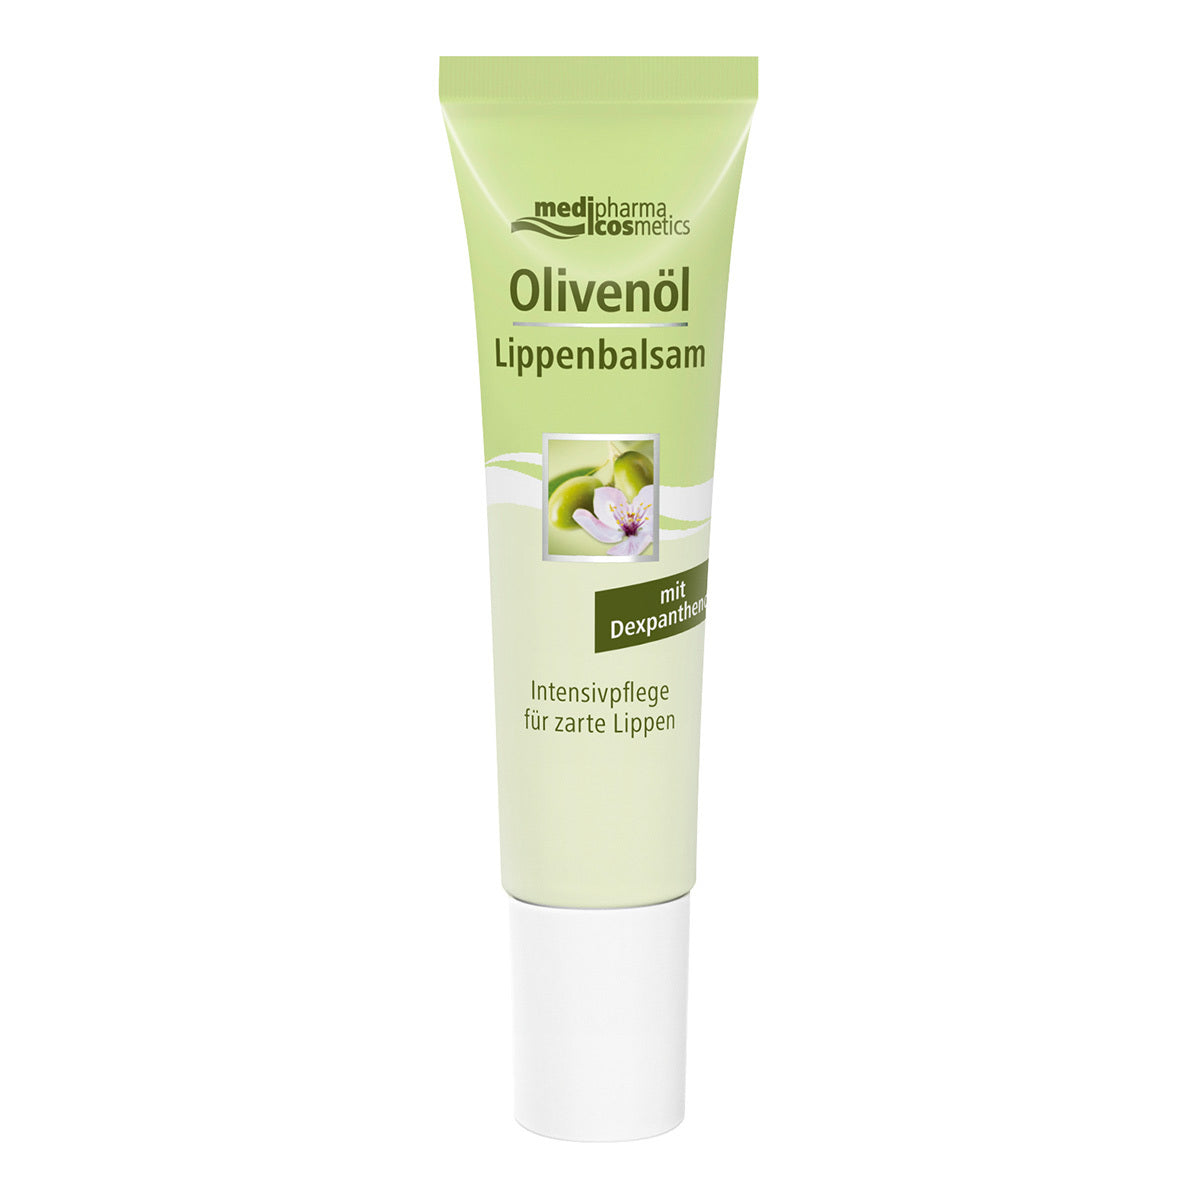 Primary image of Olivenol Lip Balm